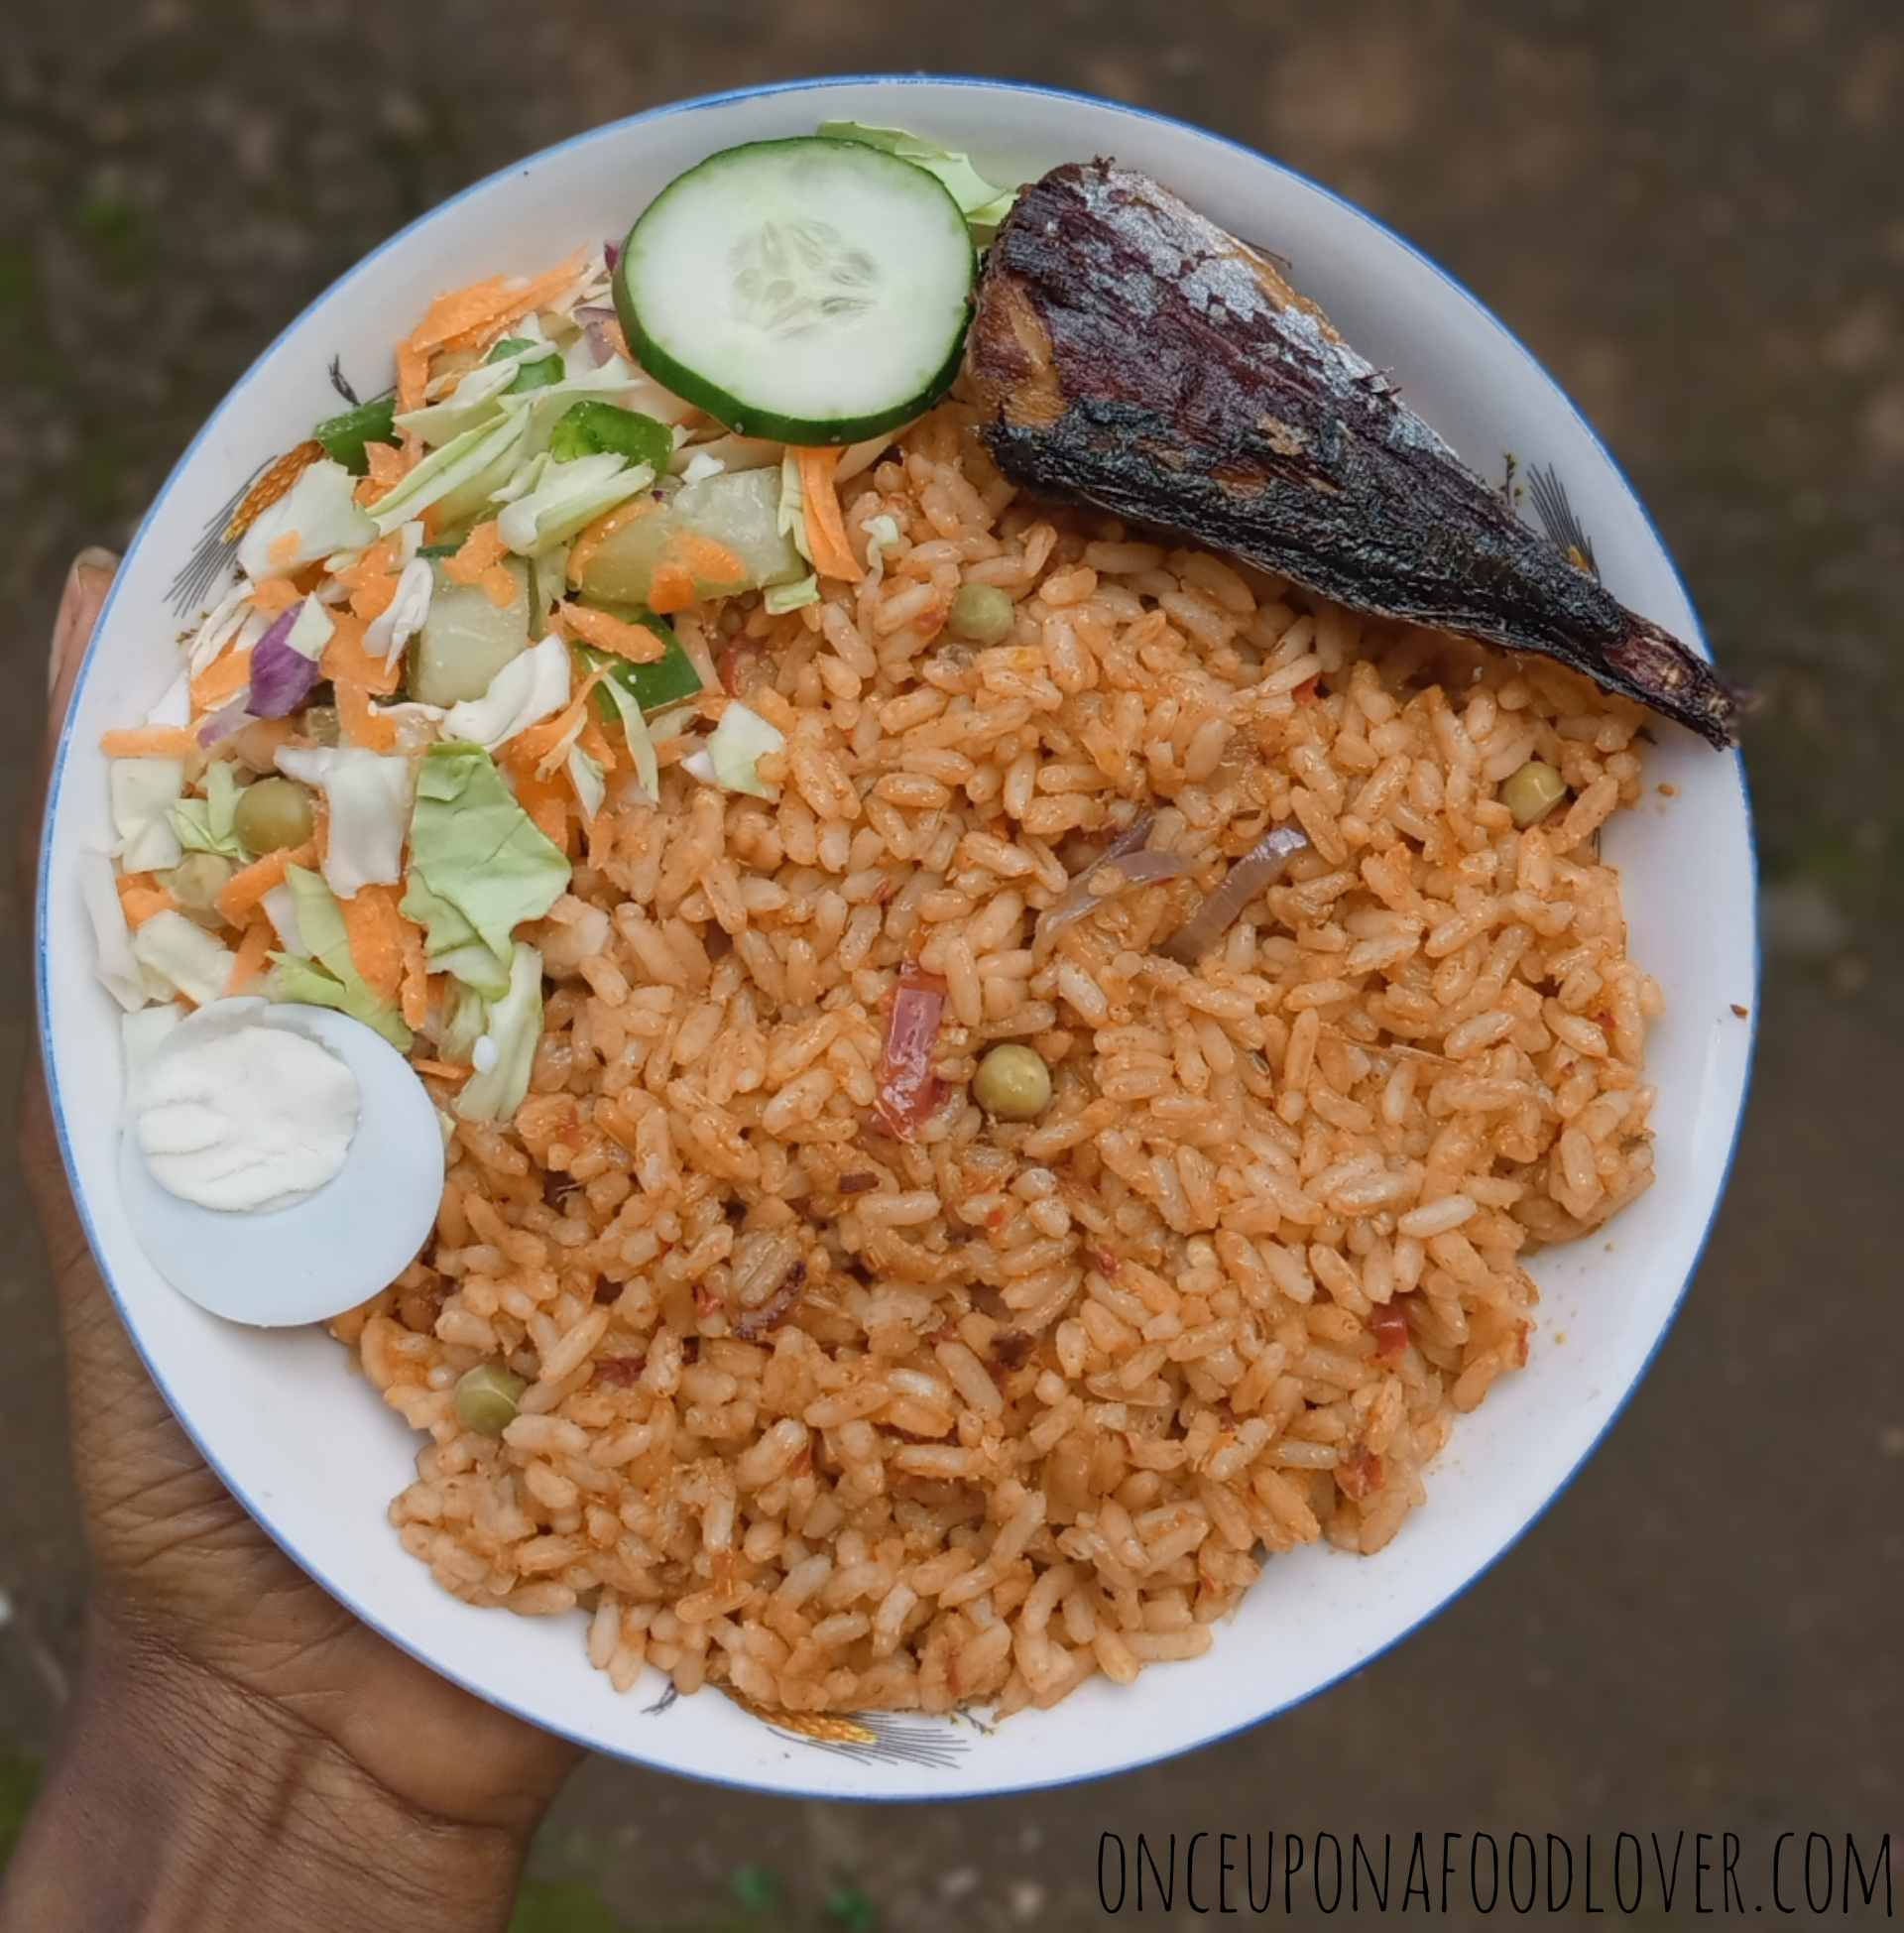 Yummy plate of Jollof rice